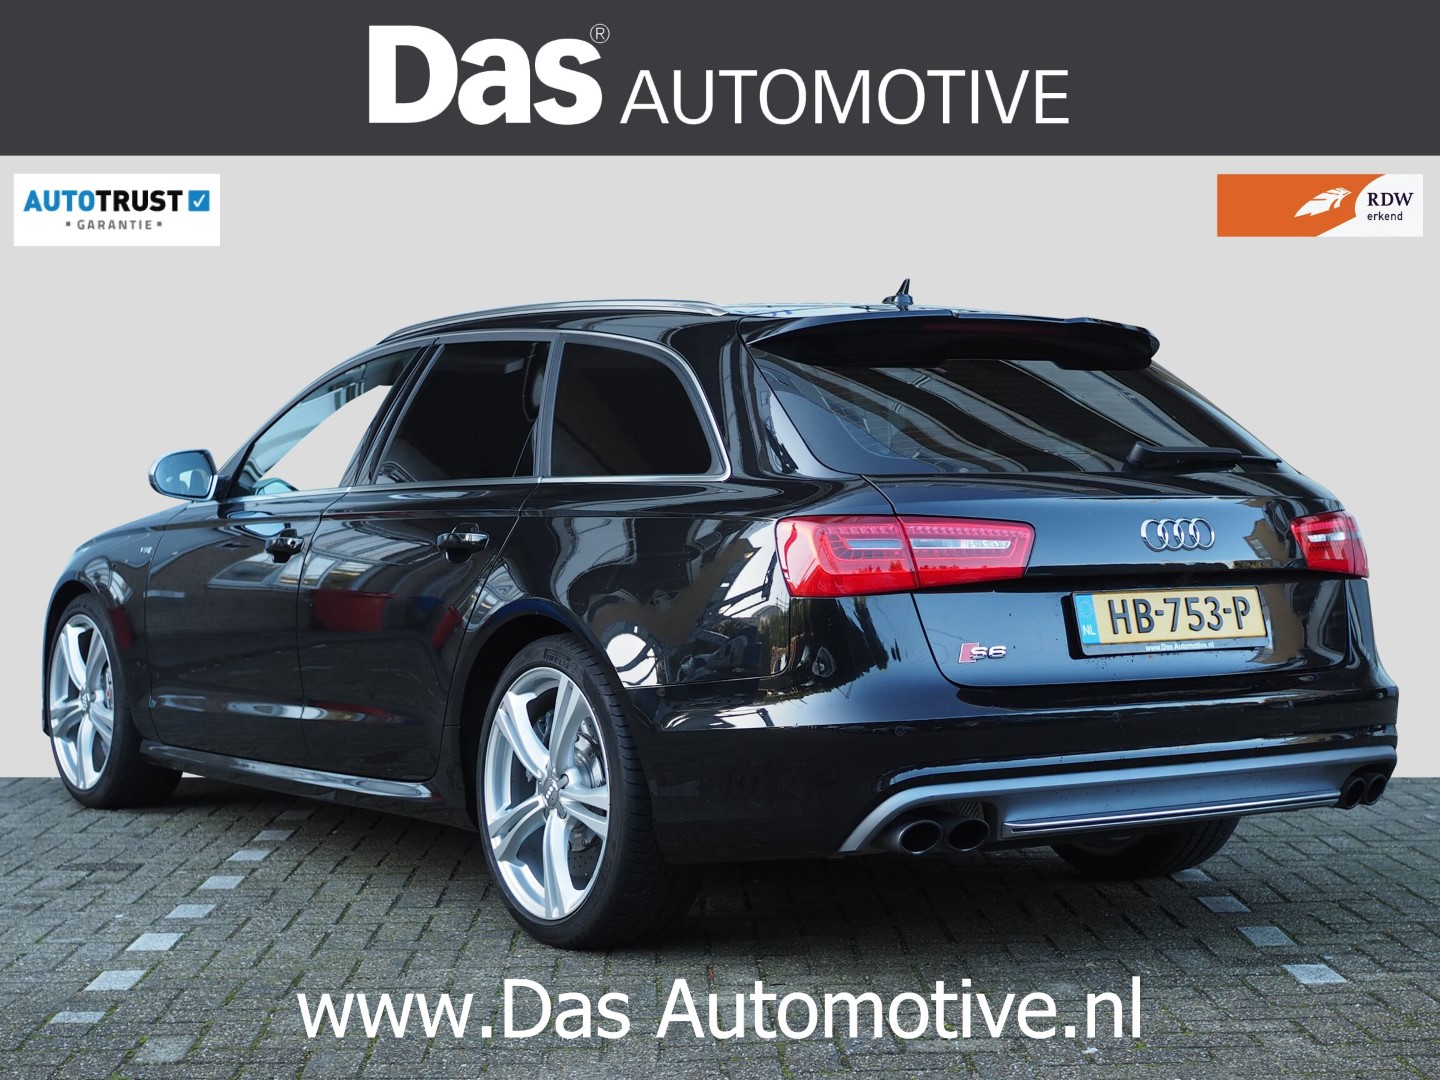 Audi S6 Avant uit Duitsland importeren